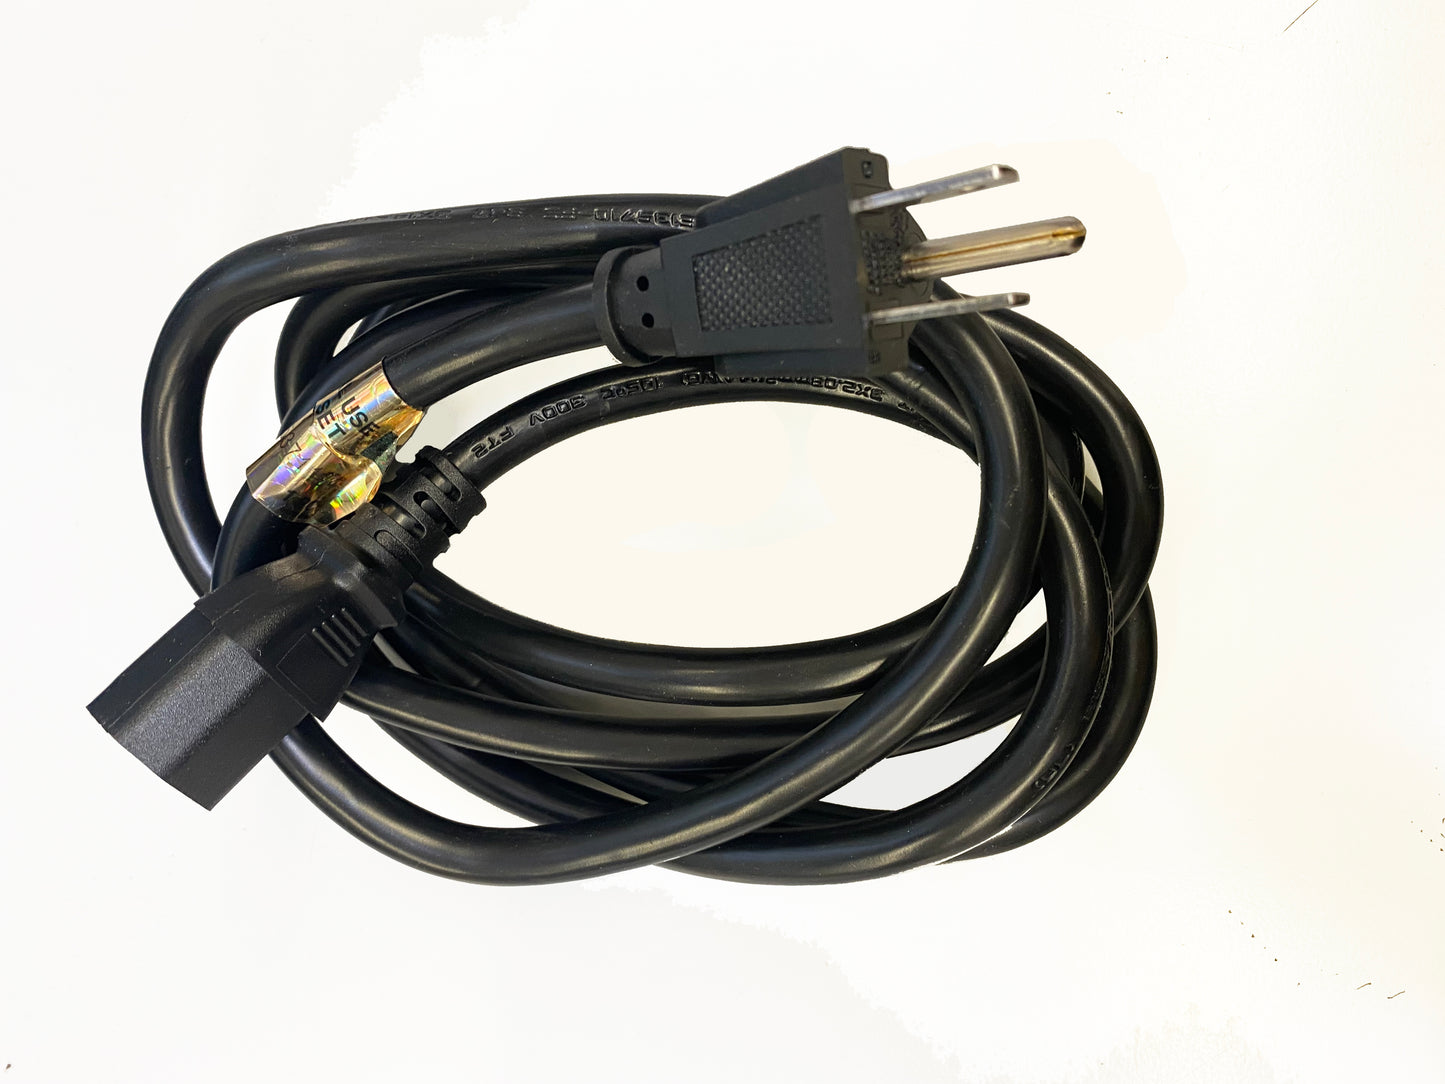 PWR-US_IEC 120V U.S Power Cord w/fuses, Select One (N/C) w/KPA500 Purchase